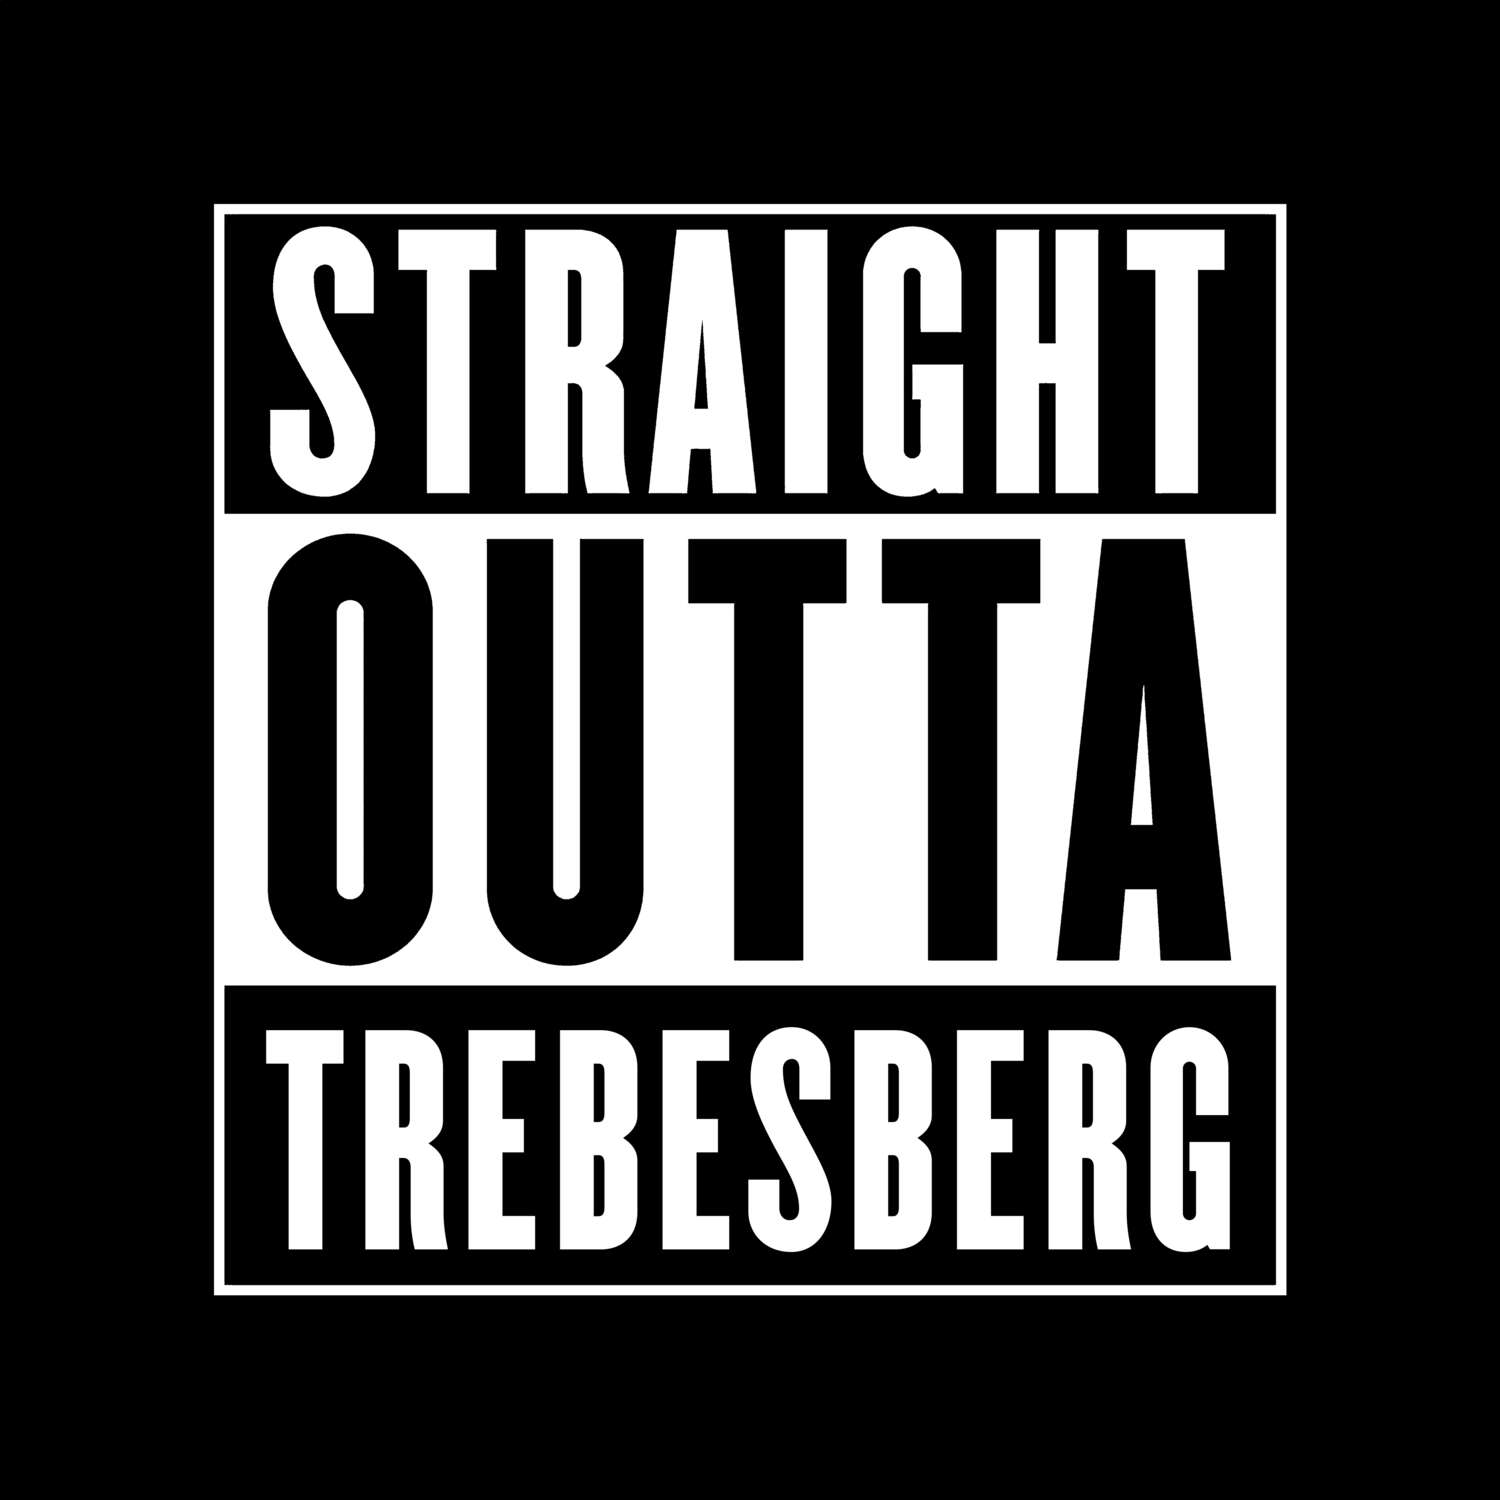 Trebesberg T-Shirt »Straight Outta«